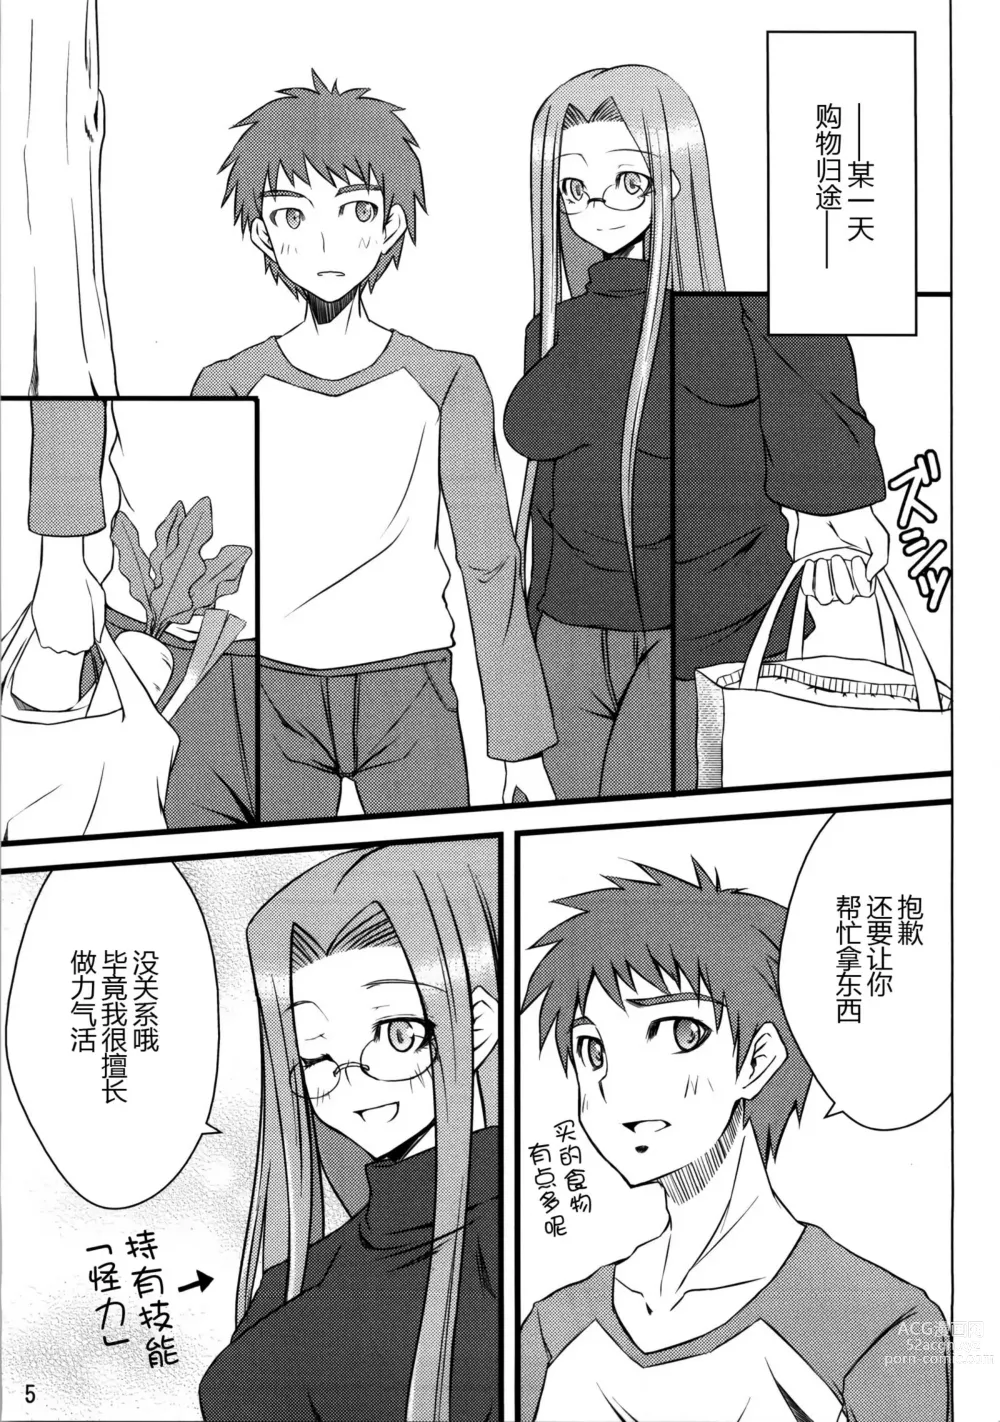 Page 5 of doujinshi R3